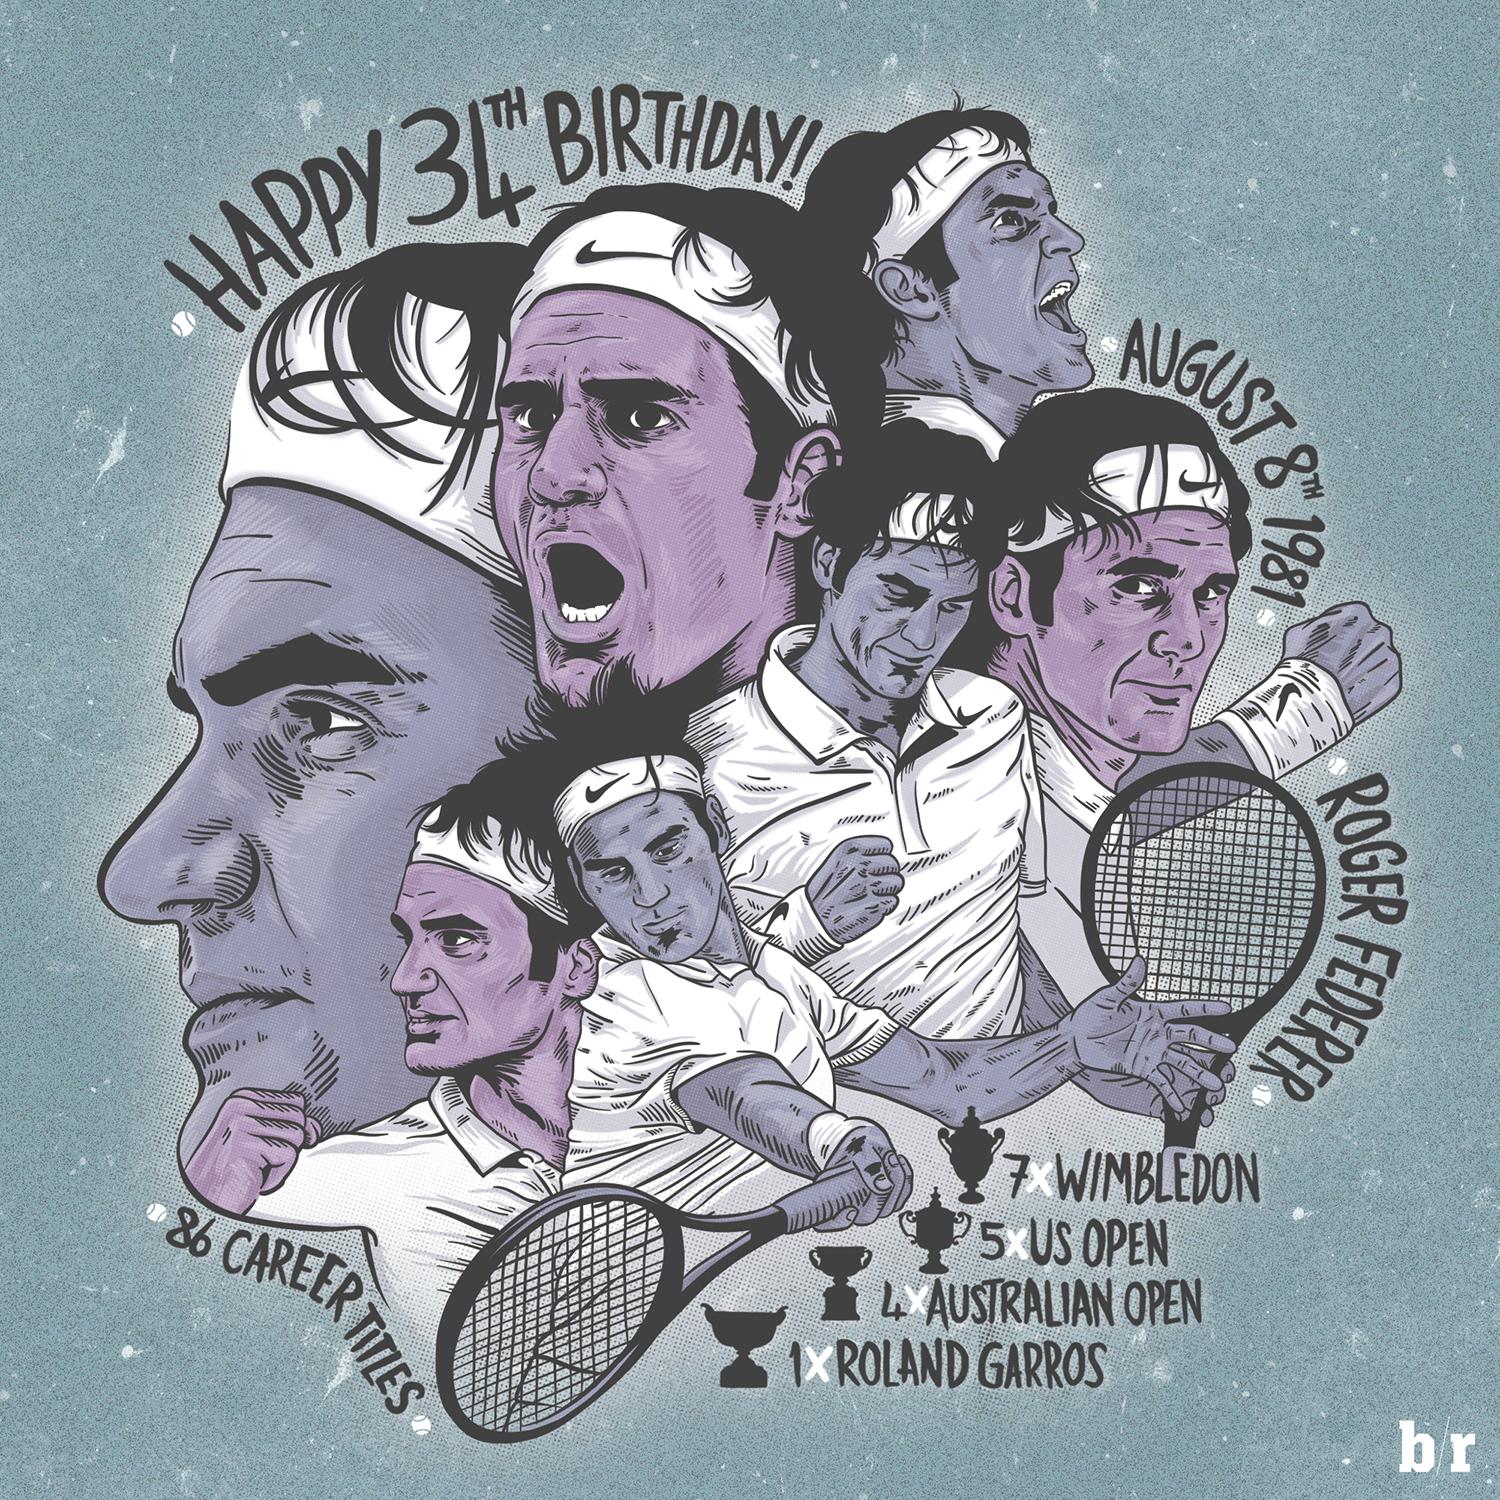 Happy 34th birthday to Roger Federer! 